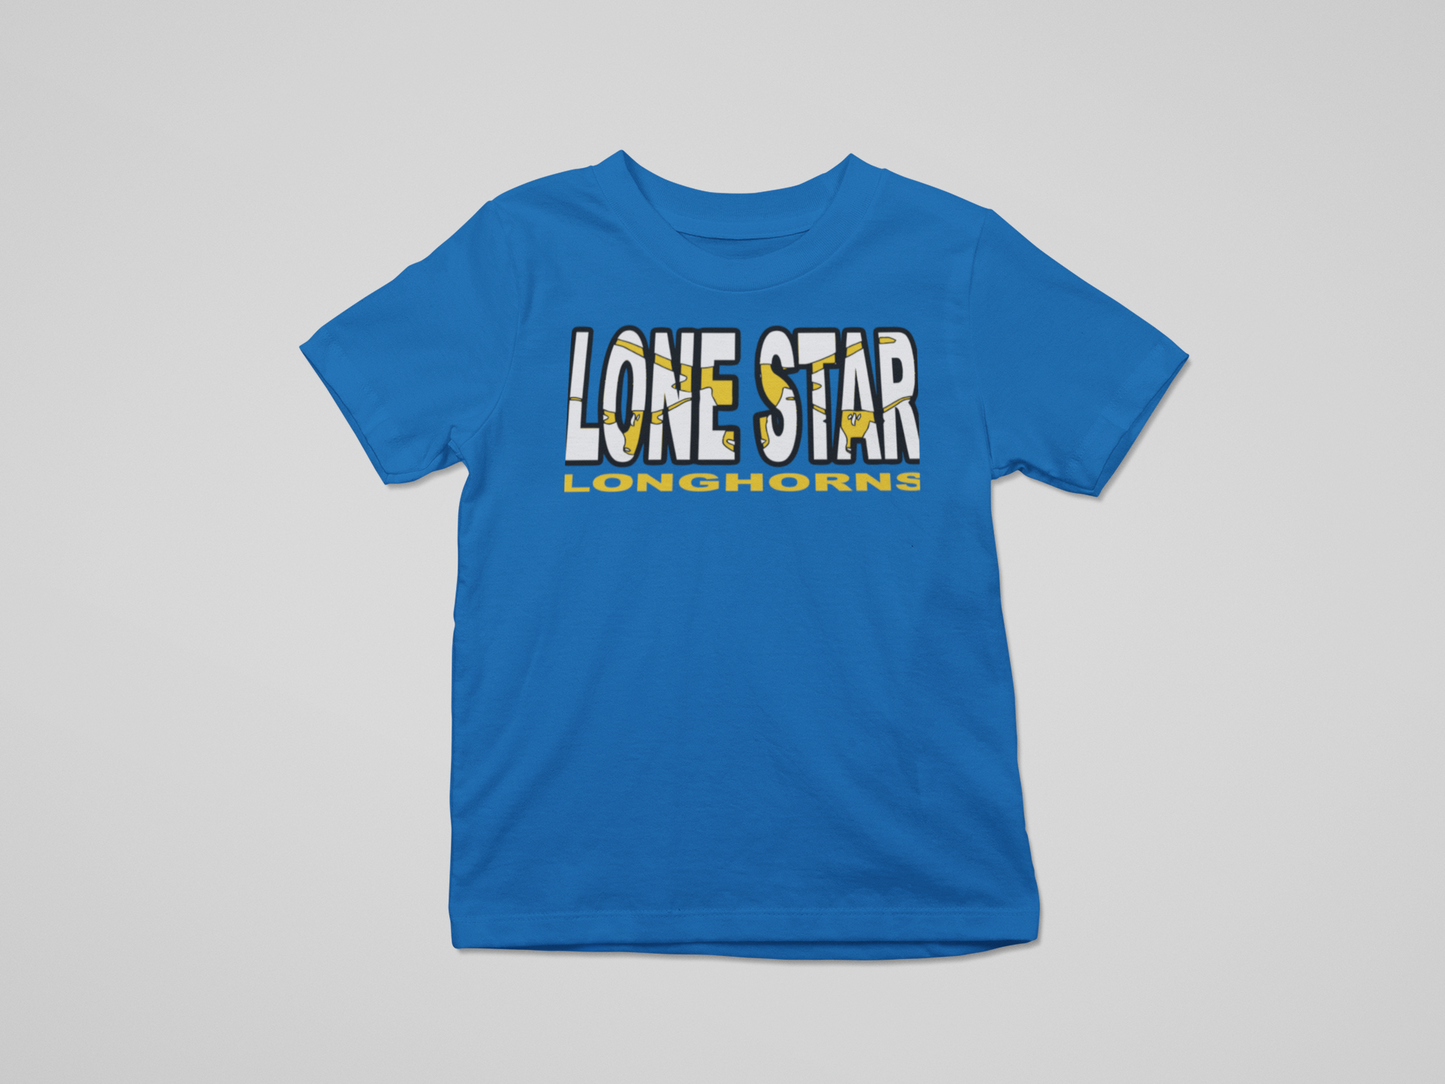 lone star longhorns toddler t-shirt: for cute longhorns fans only!